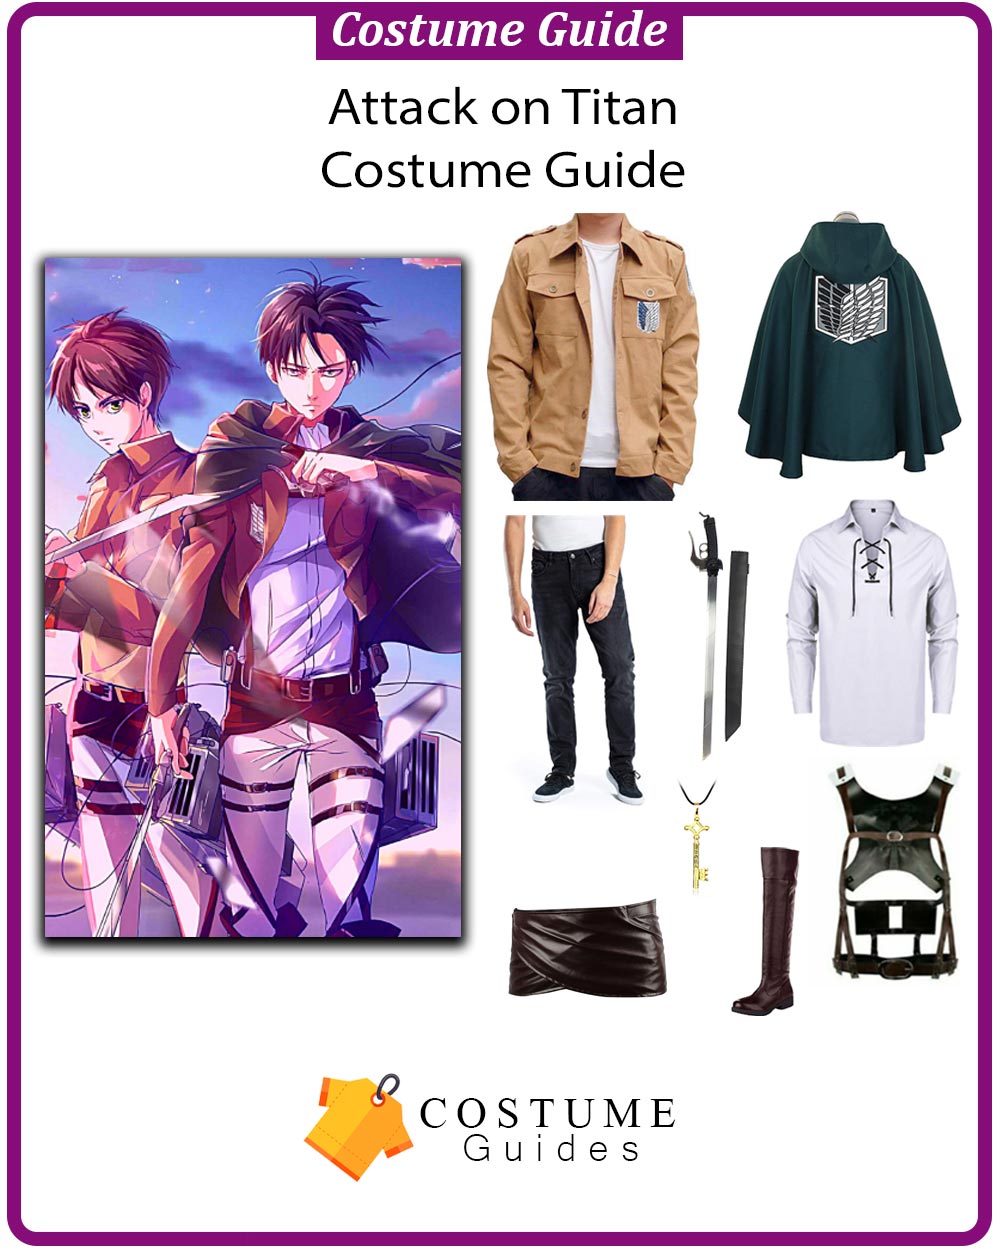 AOT Costume Guide